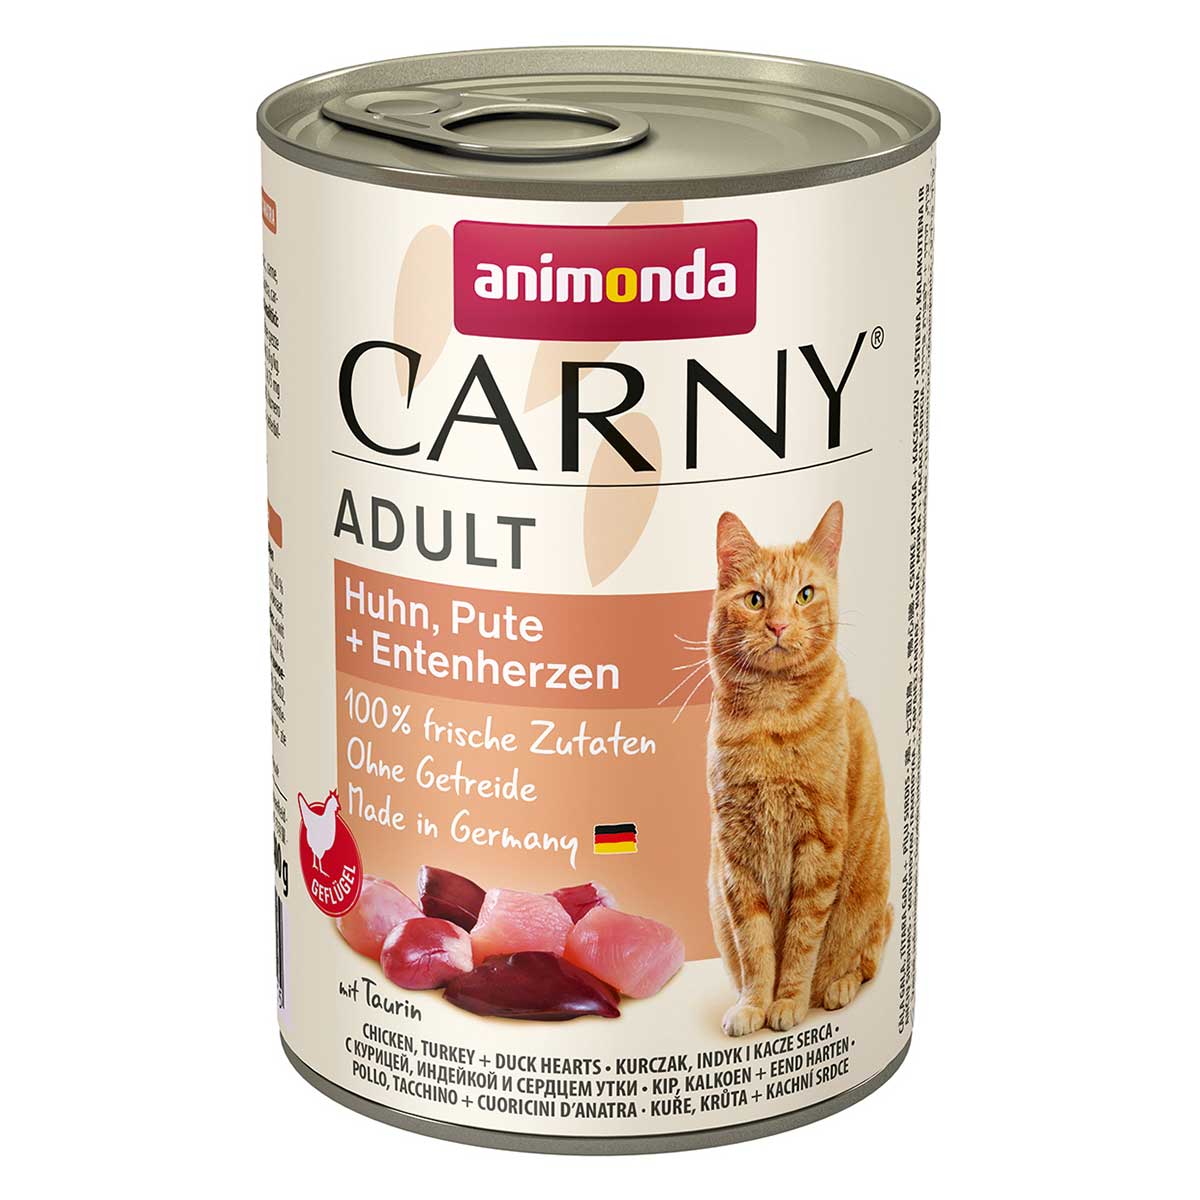 animonda Carny Adult Huhn, Pute und Entenherz 6x400g von animonda Carny